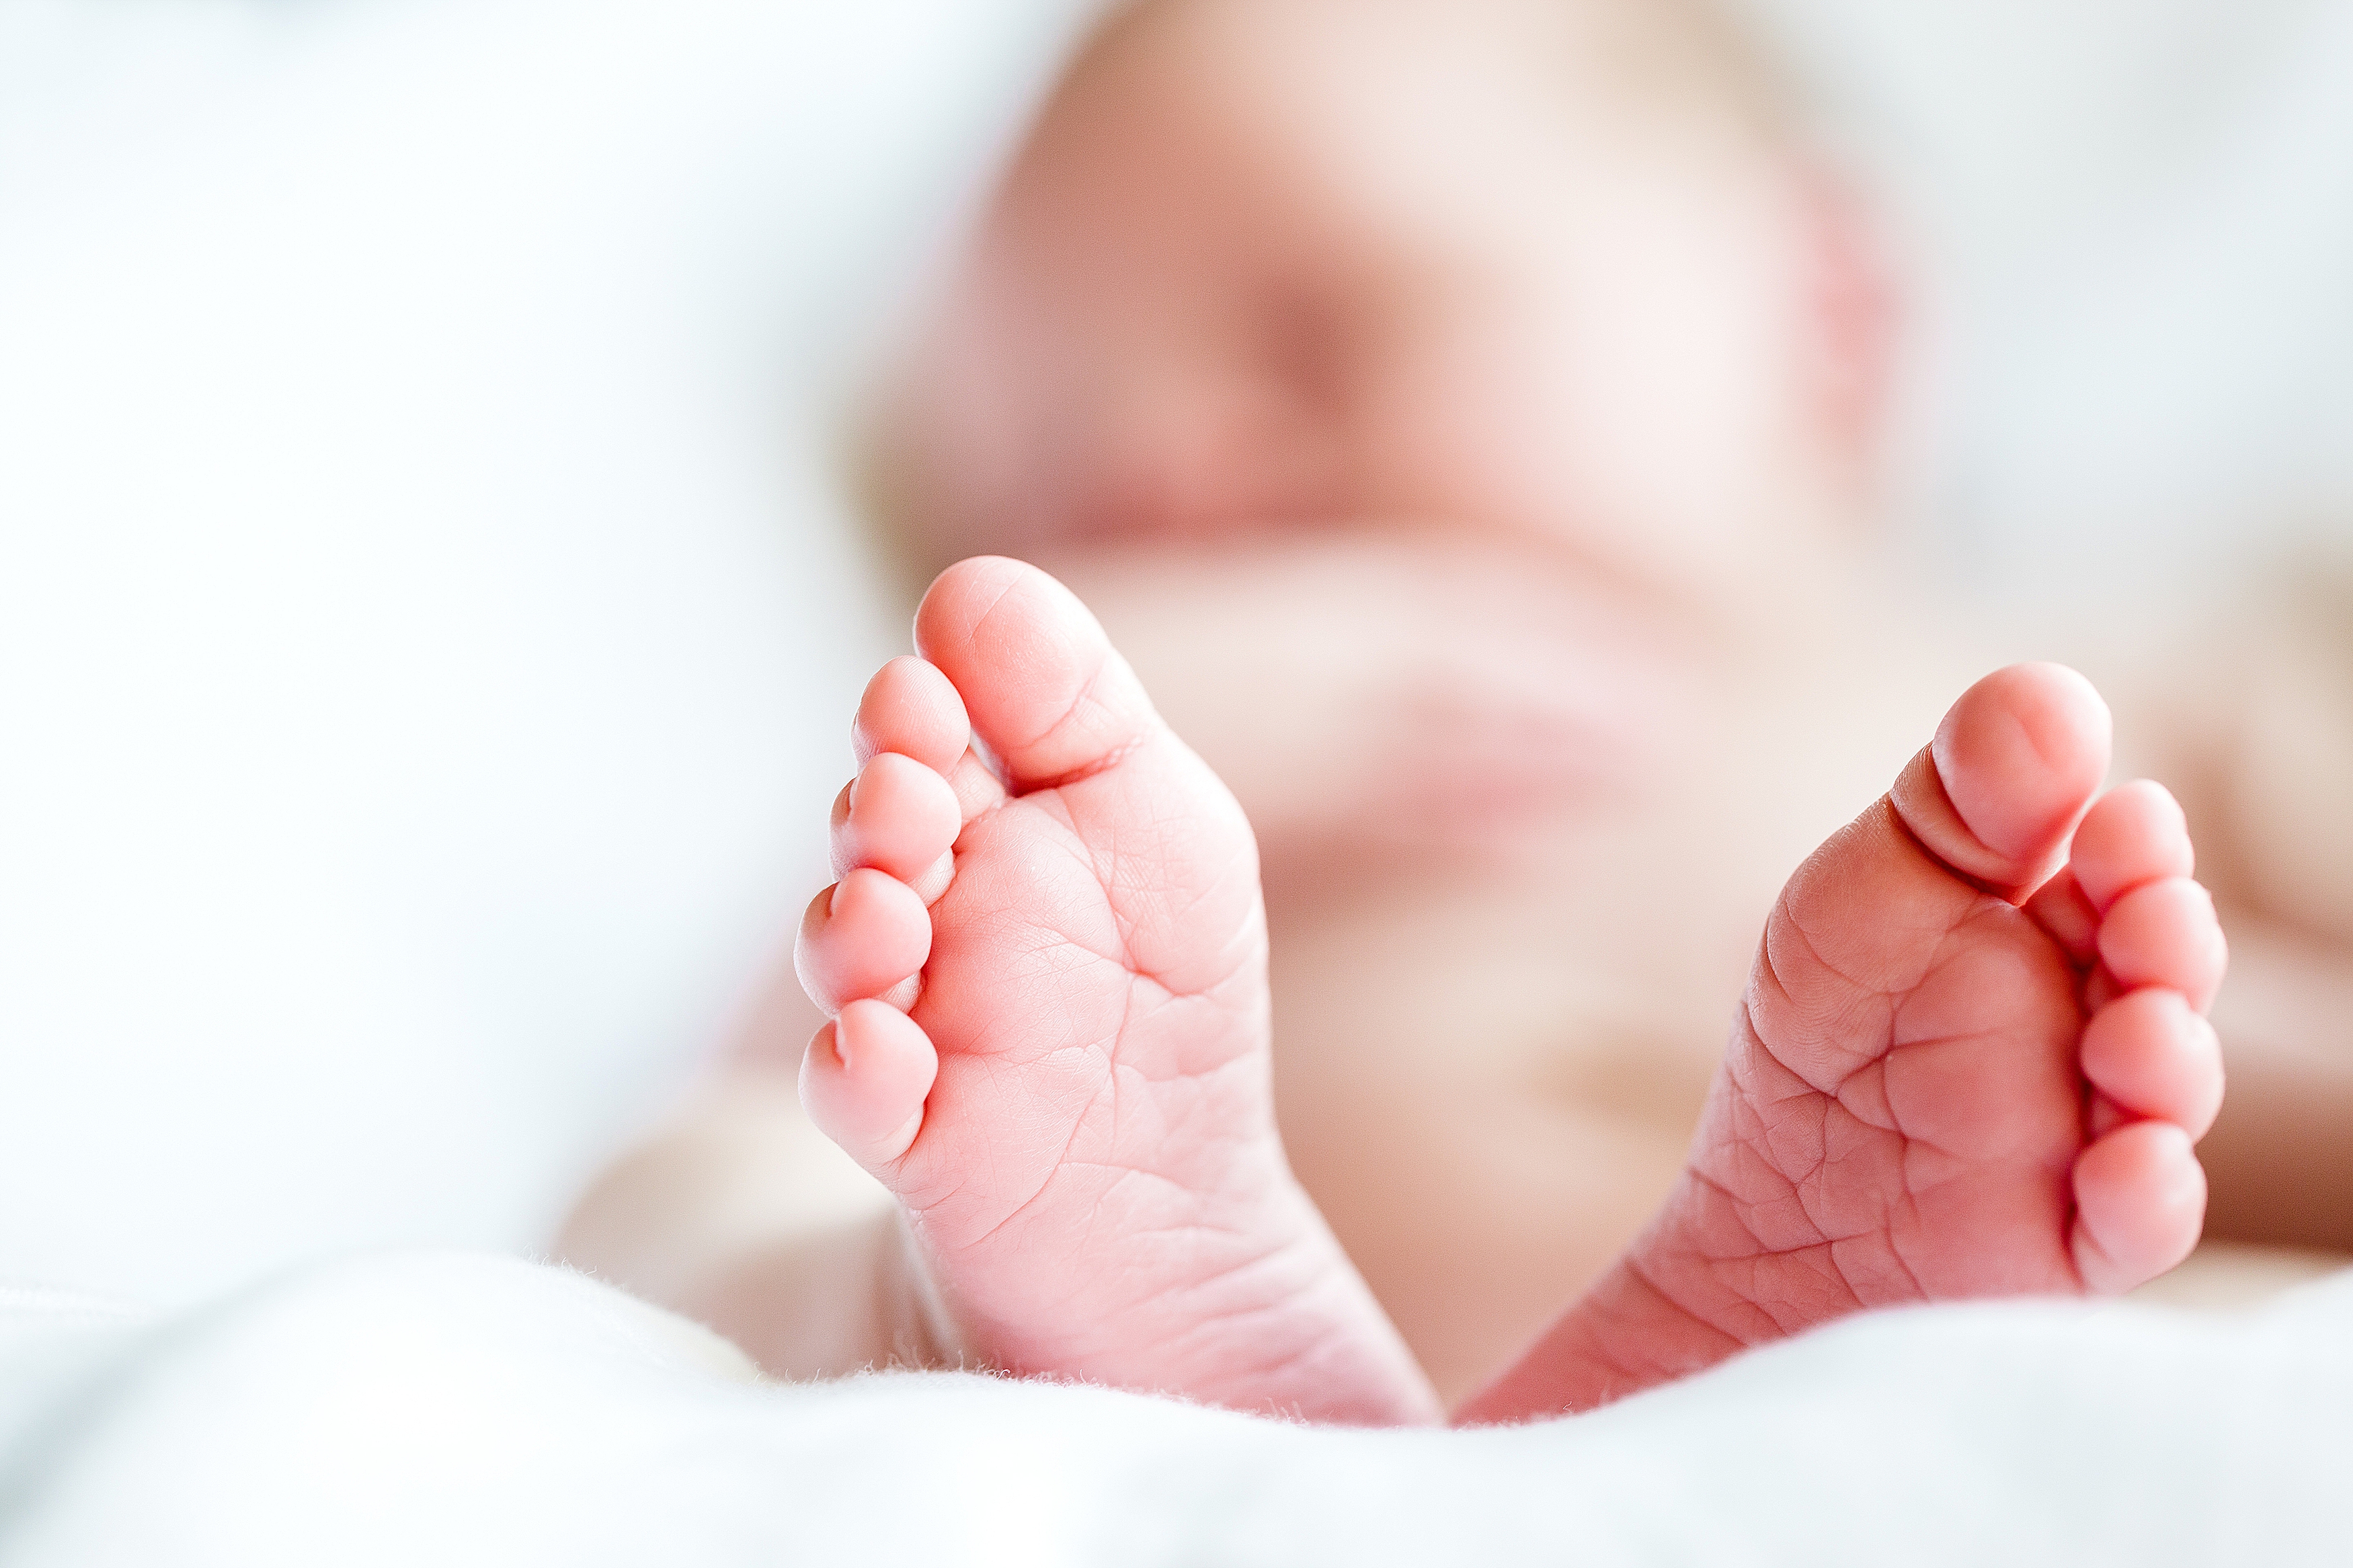 Photo of newborn baby sleeping, with feet in focus.